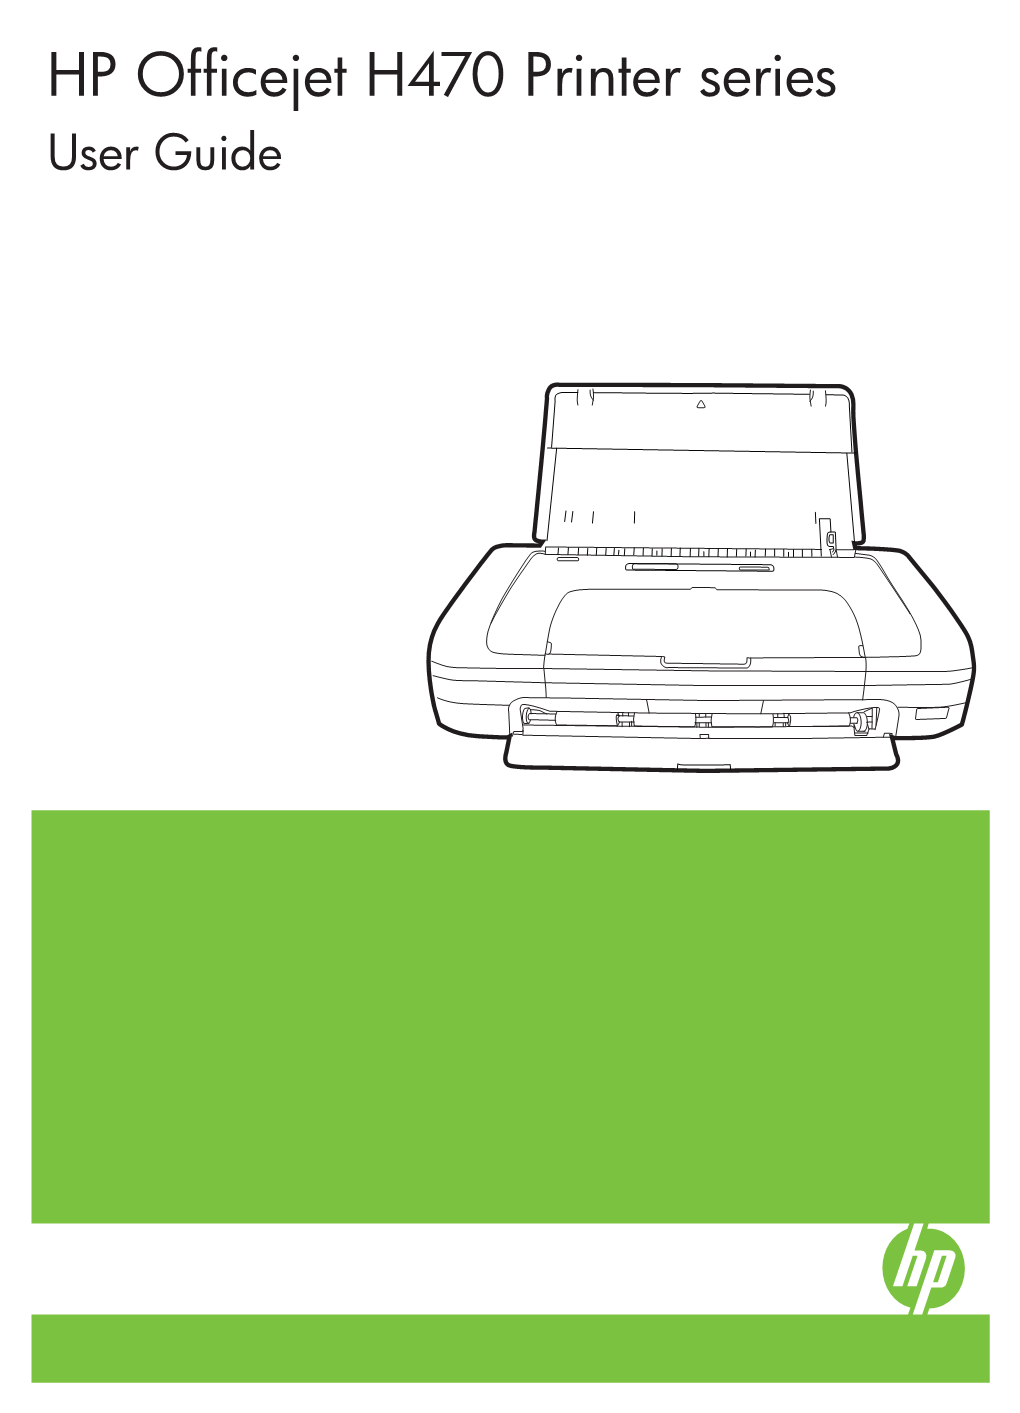 HP Officejet H470 Printer Series User Guide